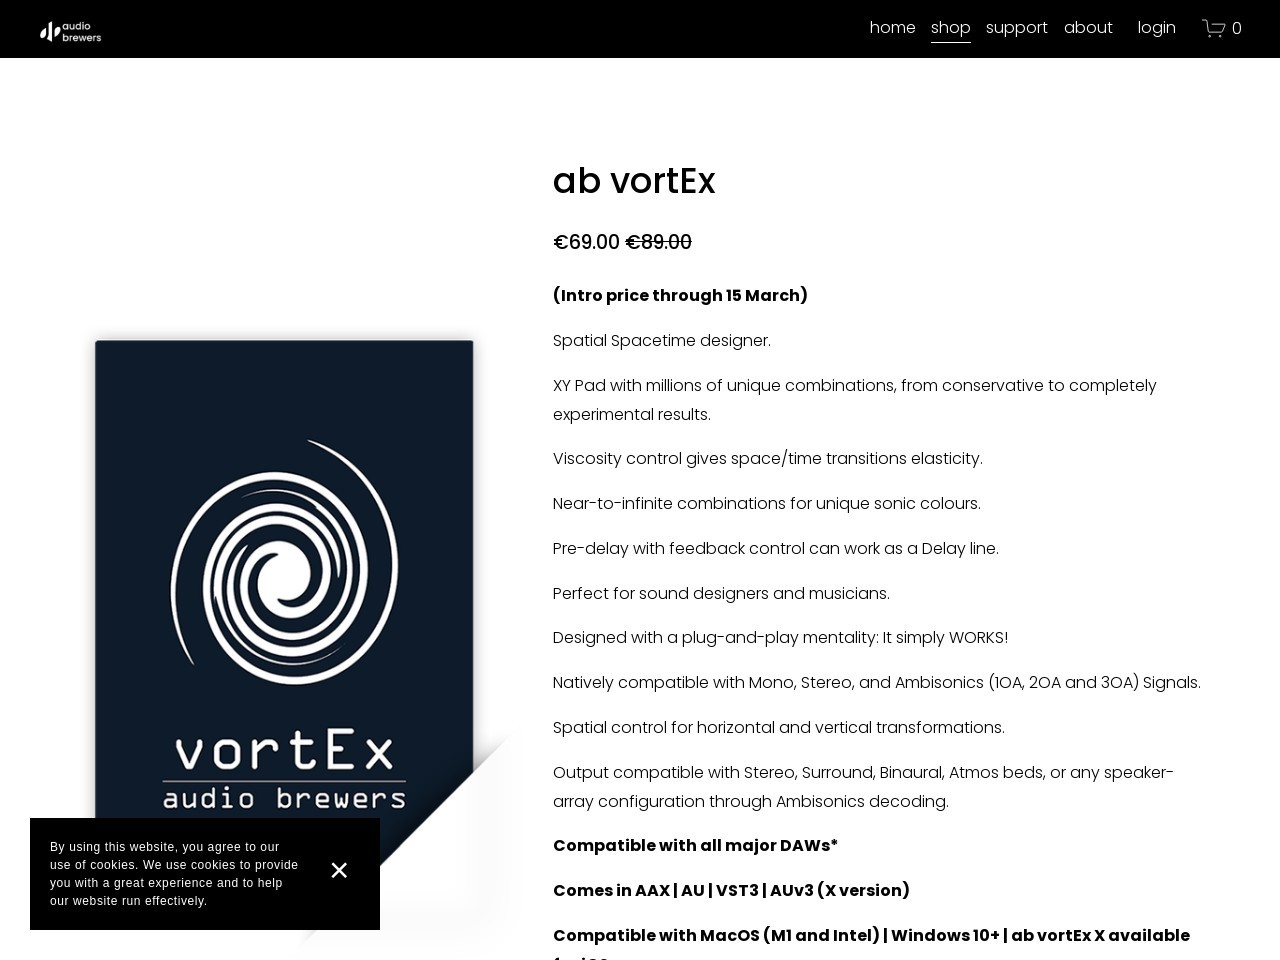 ab vortEx — Audio Brewers